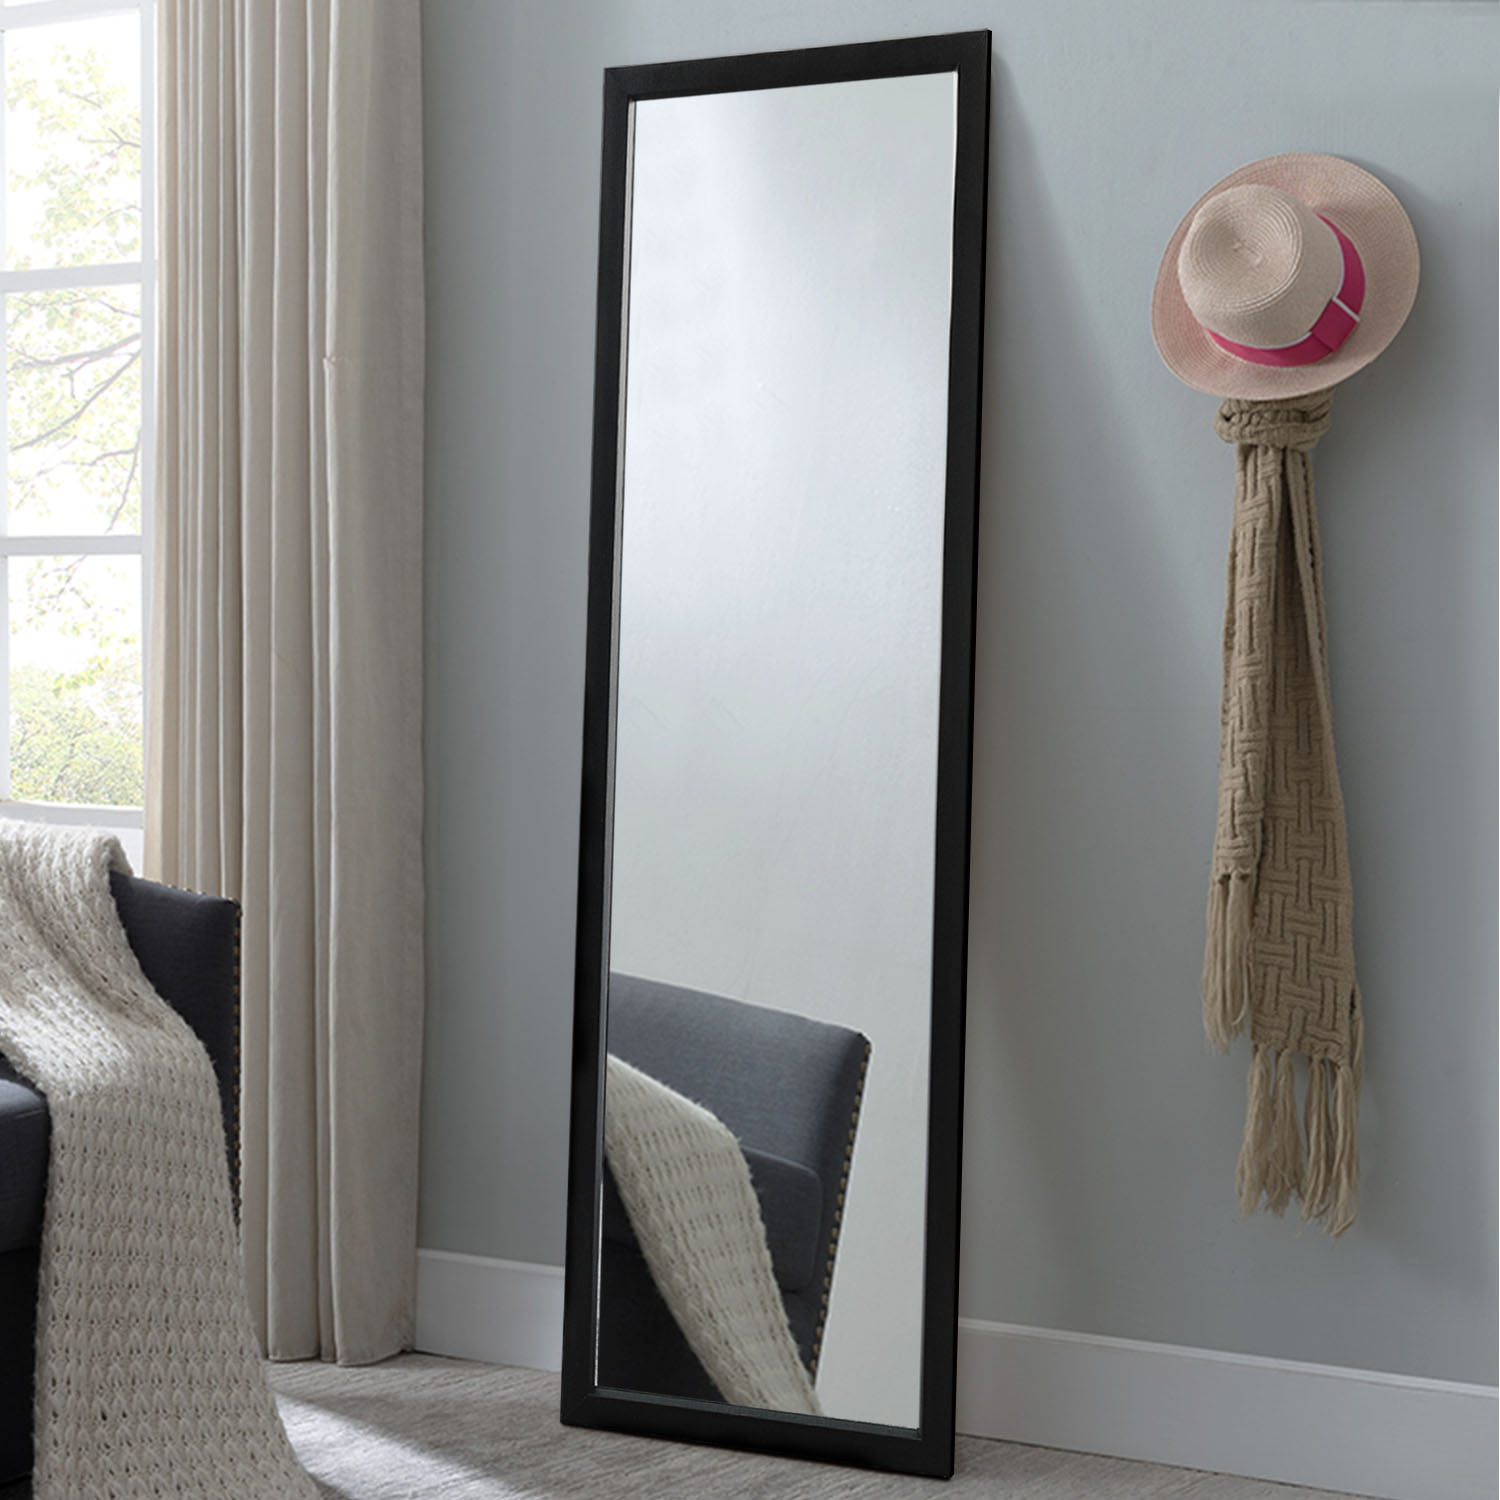 Neutype 55" x 16" Black Full Length Mirror Floor Mirror Wall Mounted